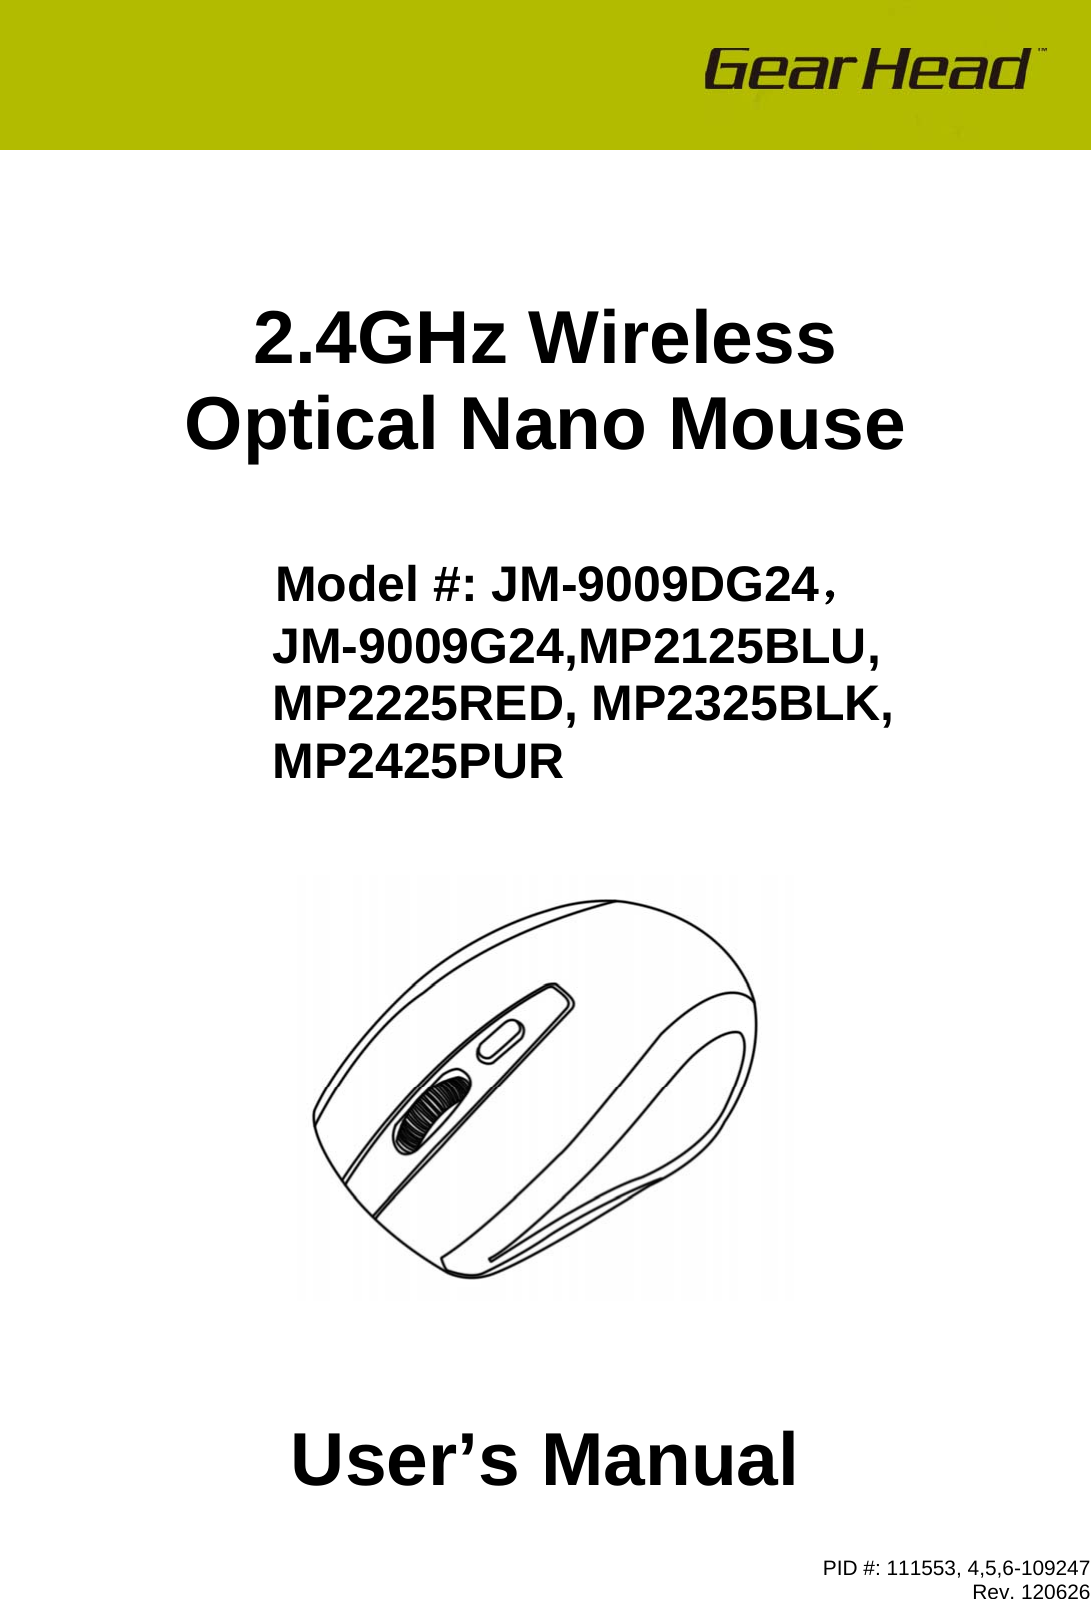 PID #: 111553, 4,5,6-109247  Rev. 120626        2.4GHz Wireless Optical Nano Mouse    Model #: JM-9009DG24， JM-9009G24,MP2125BLU, MP2225RED, MP2325BLK, MP2425PUR         User’s Manual  